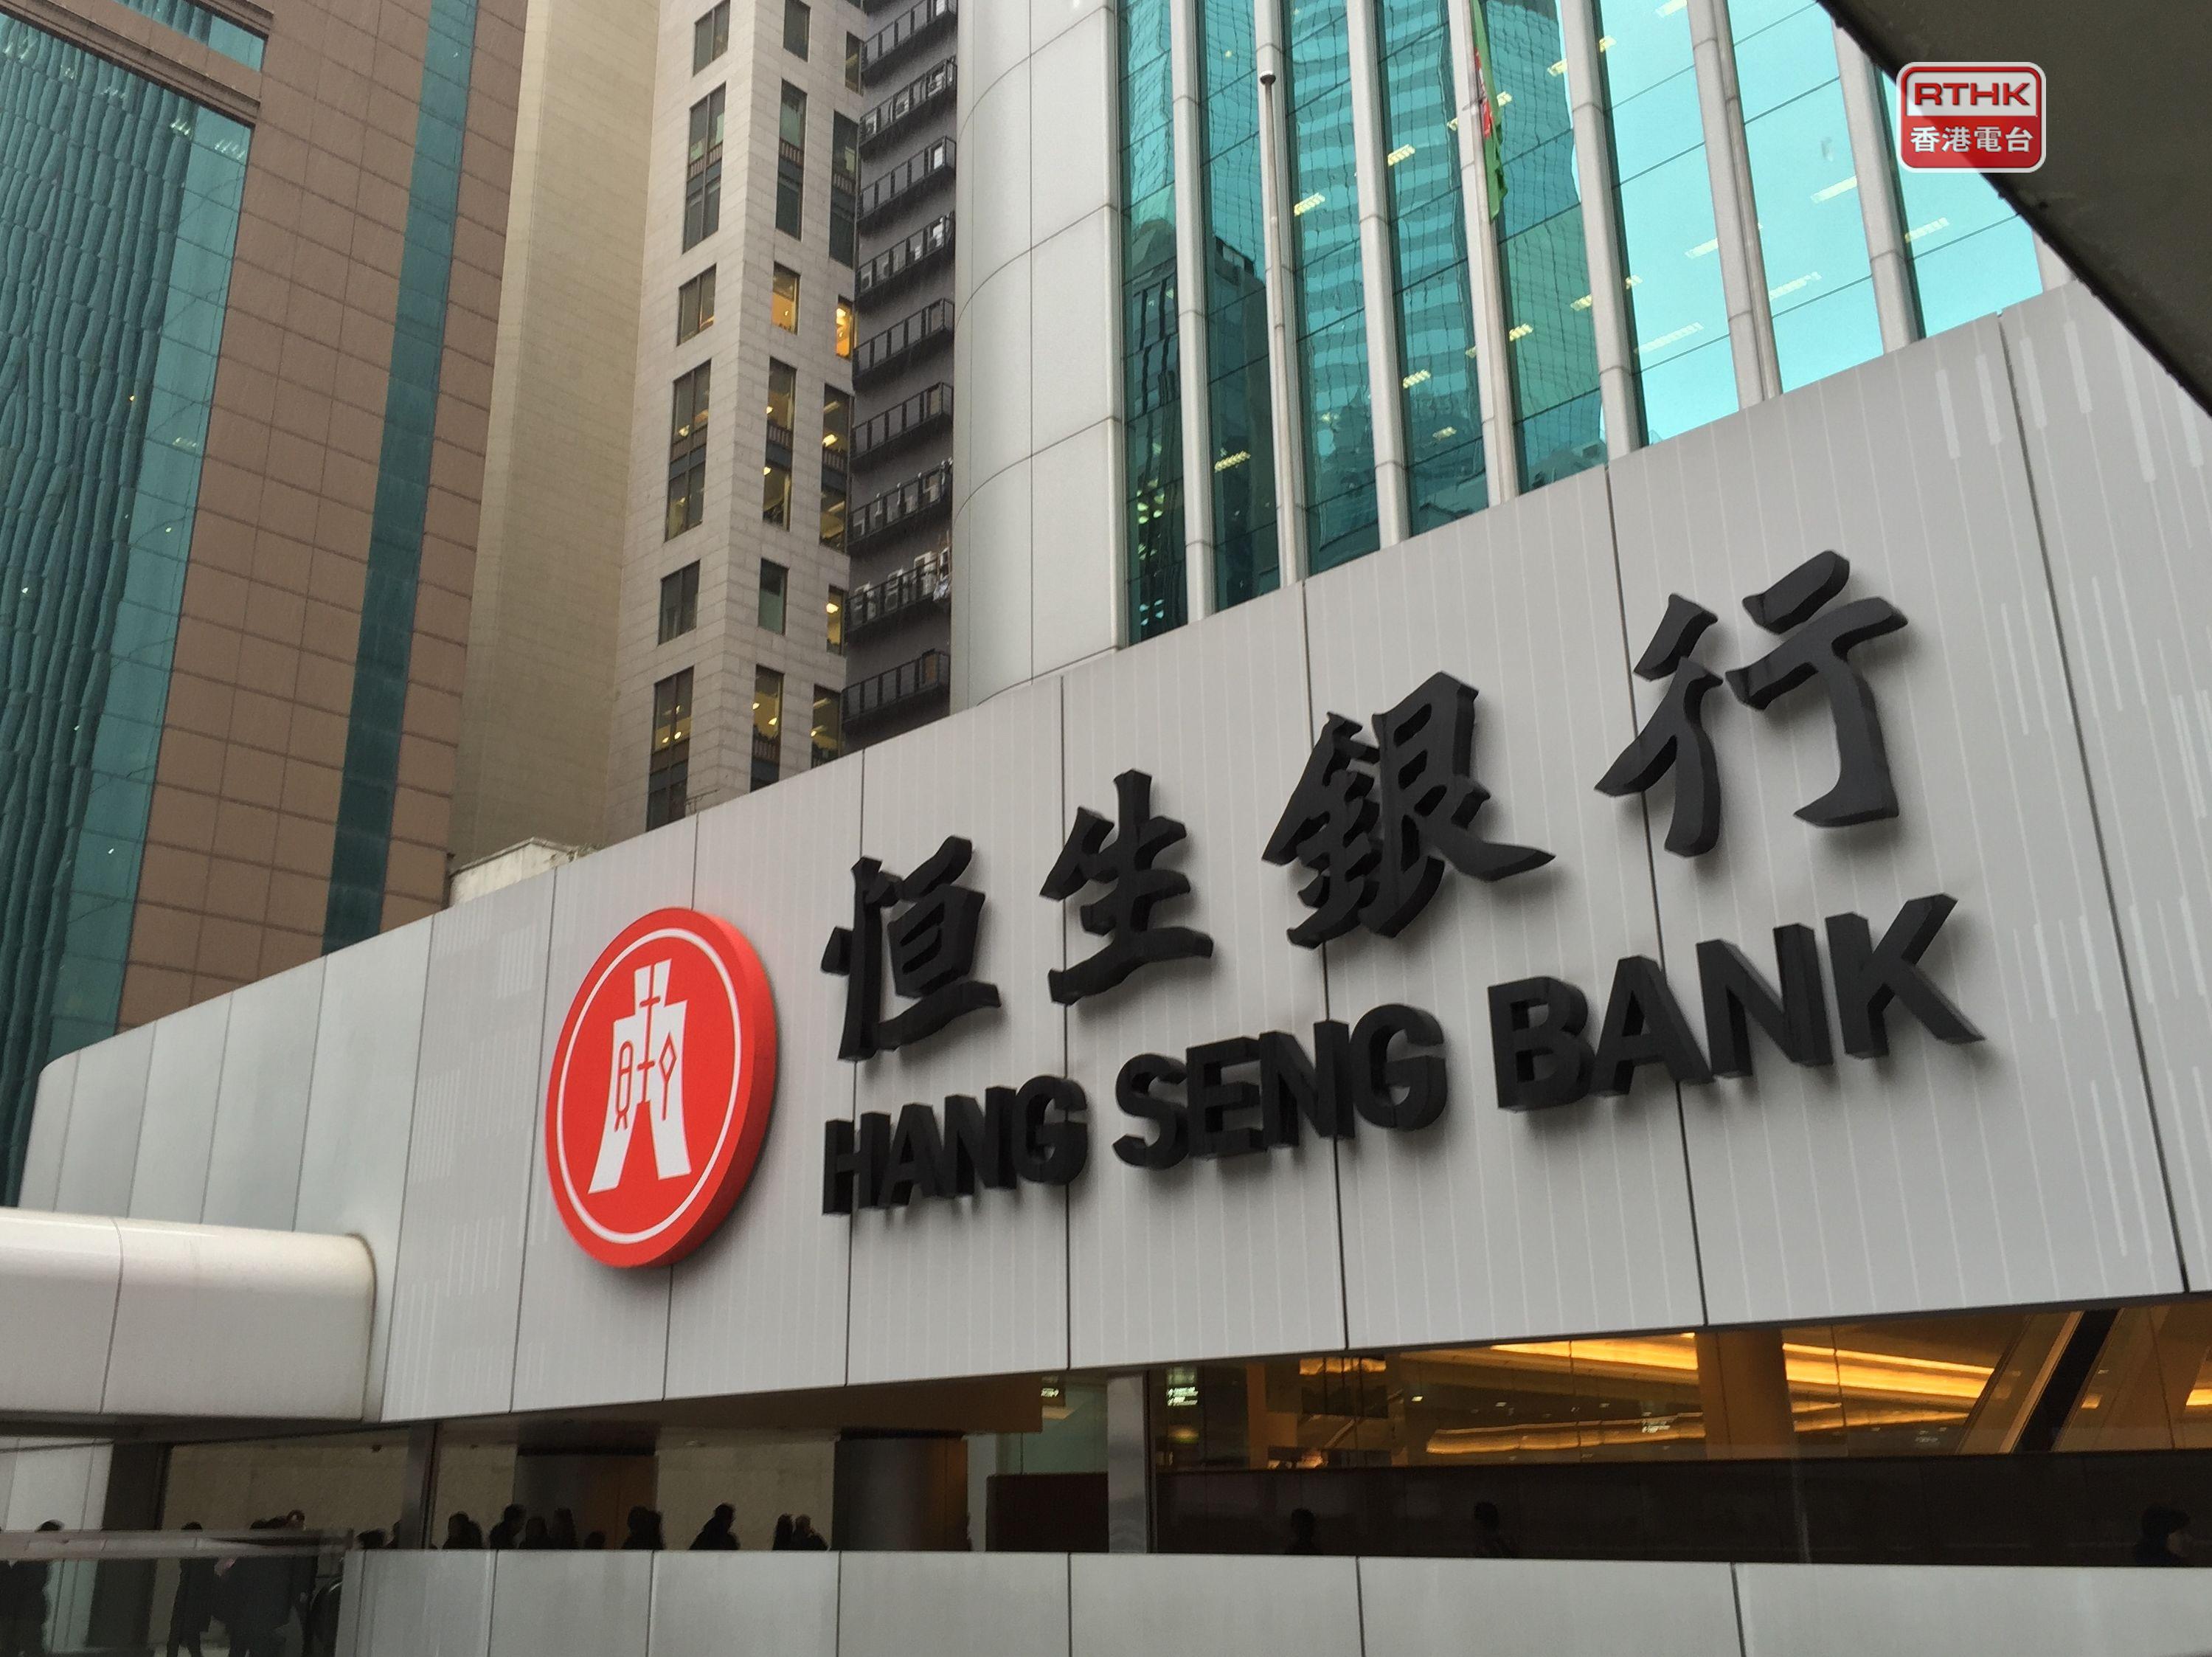 Open Hang Seng Bank Account | 開香港恆生銀行戶口